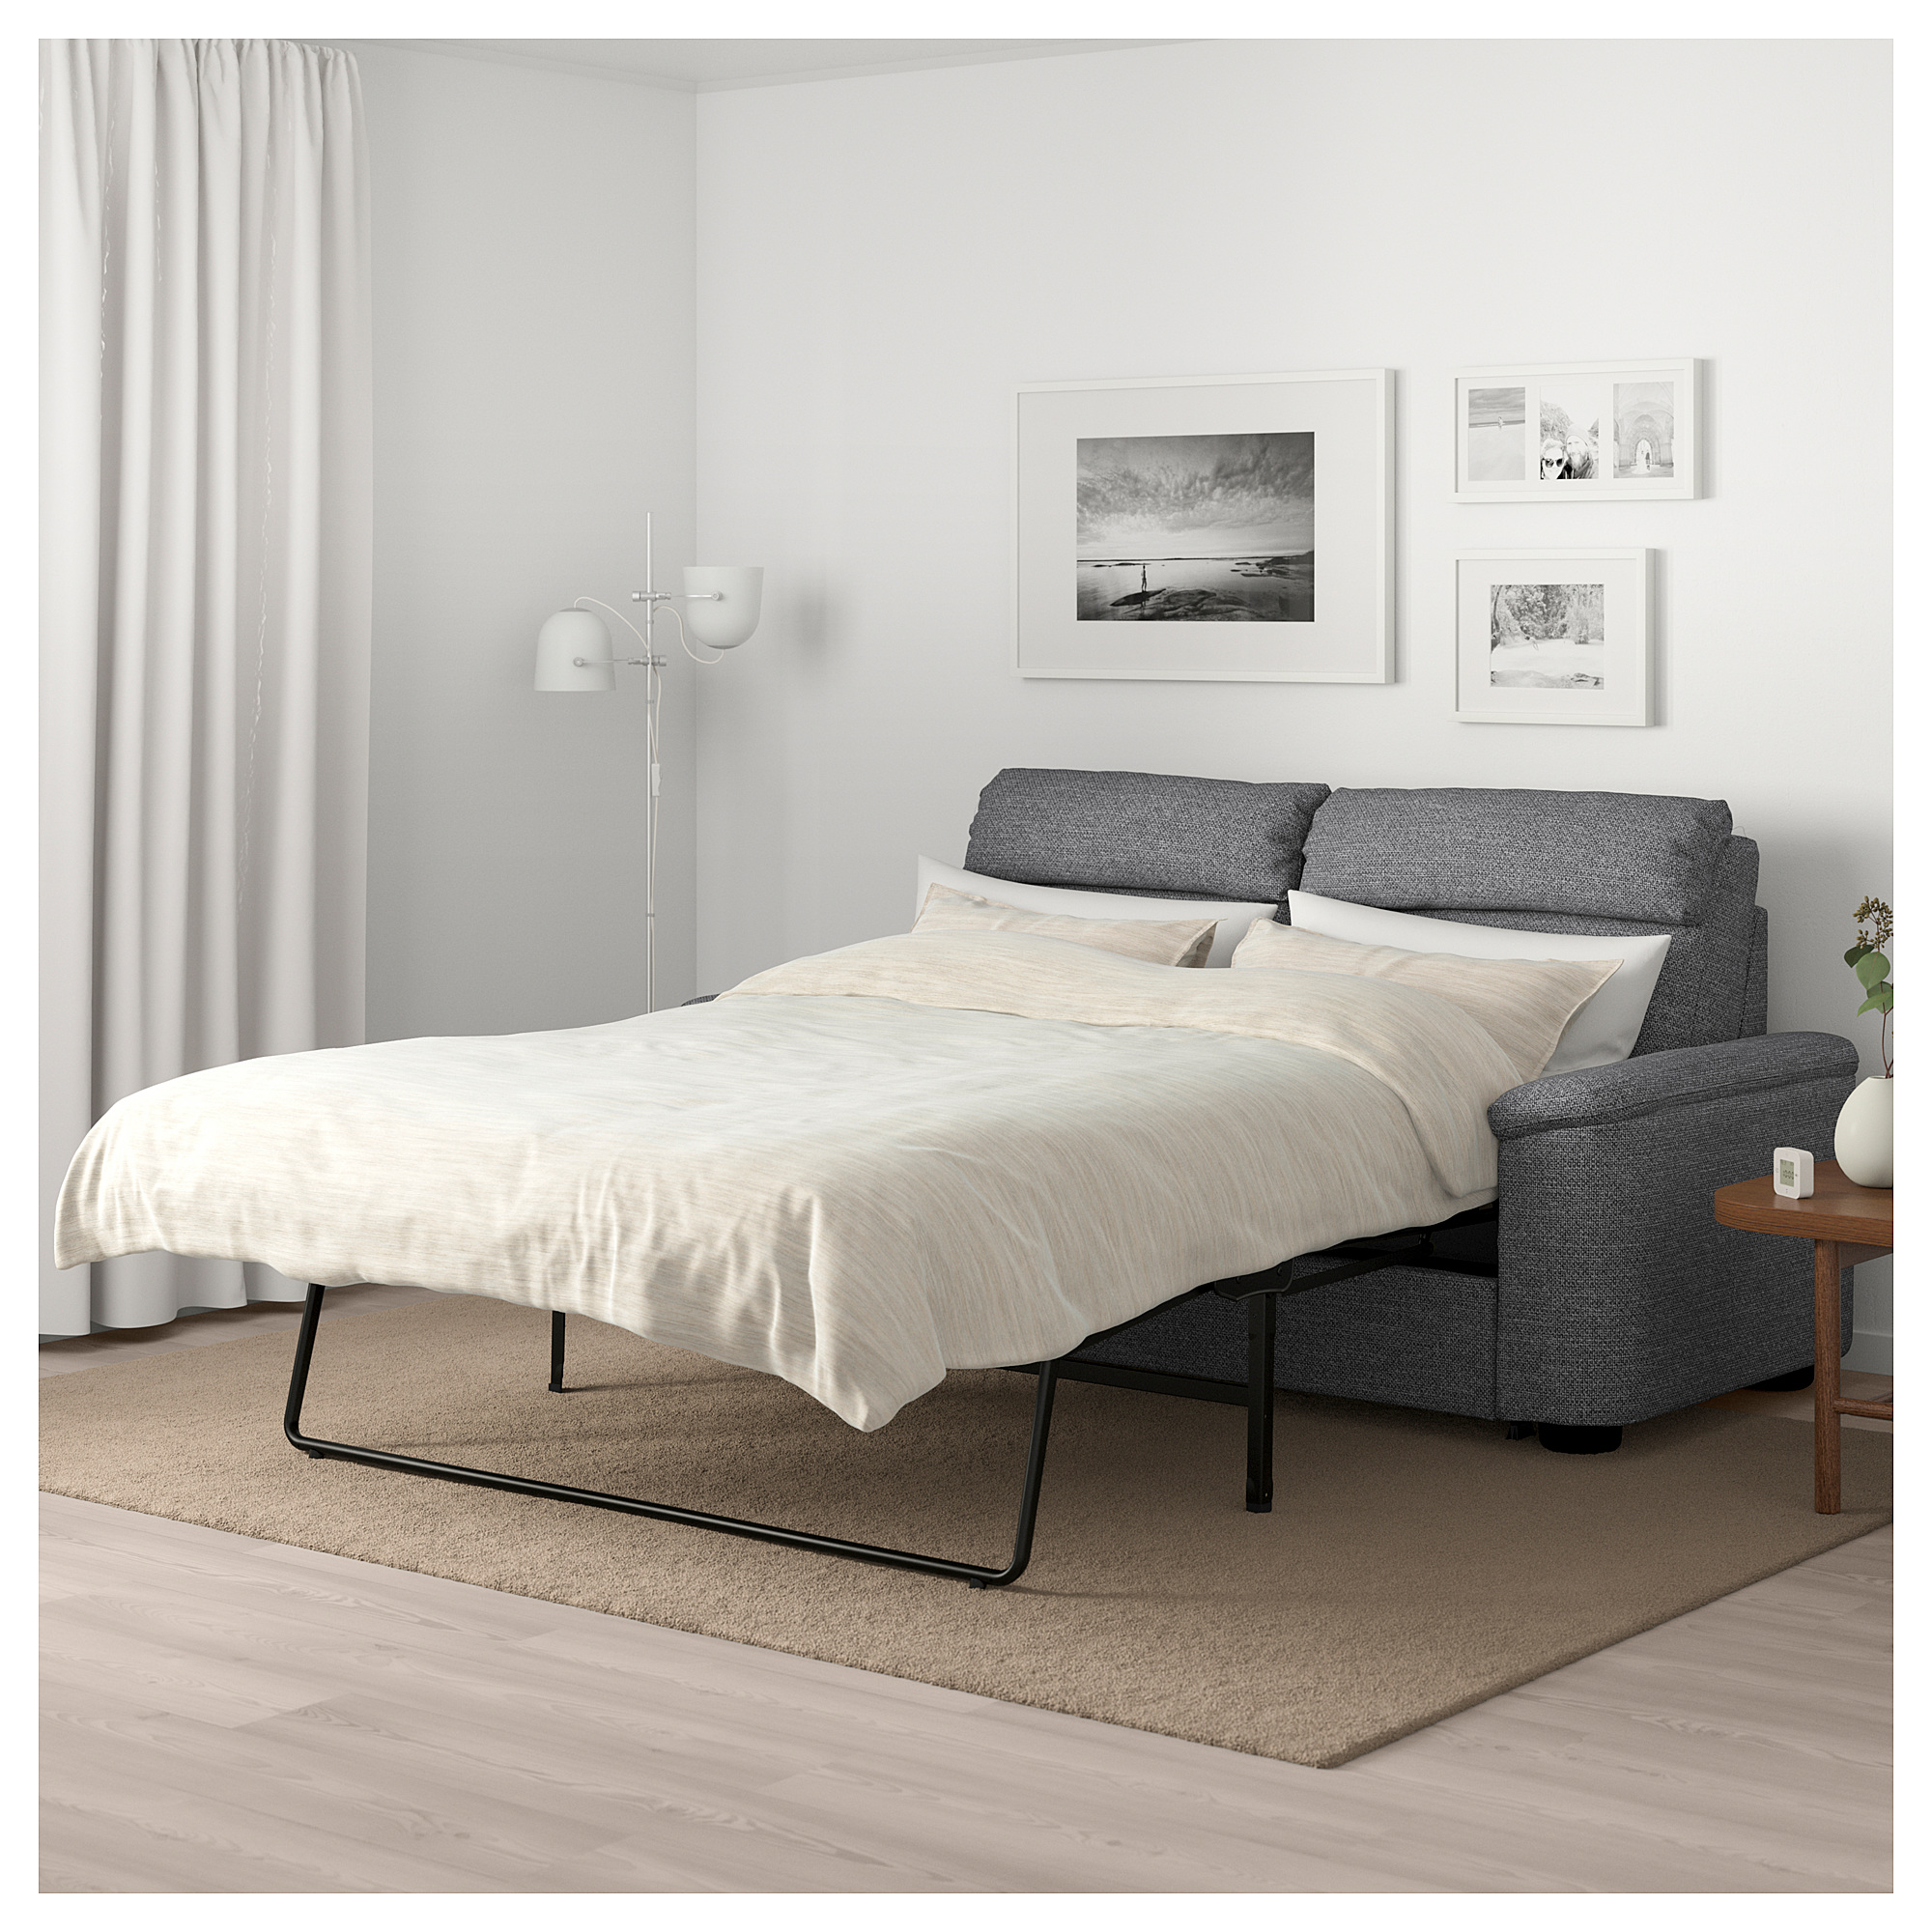 Lidhult 2 Seat Sofa Bed Lejde Greyblack Ikea Indonesia 